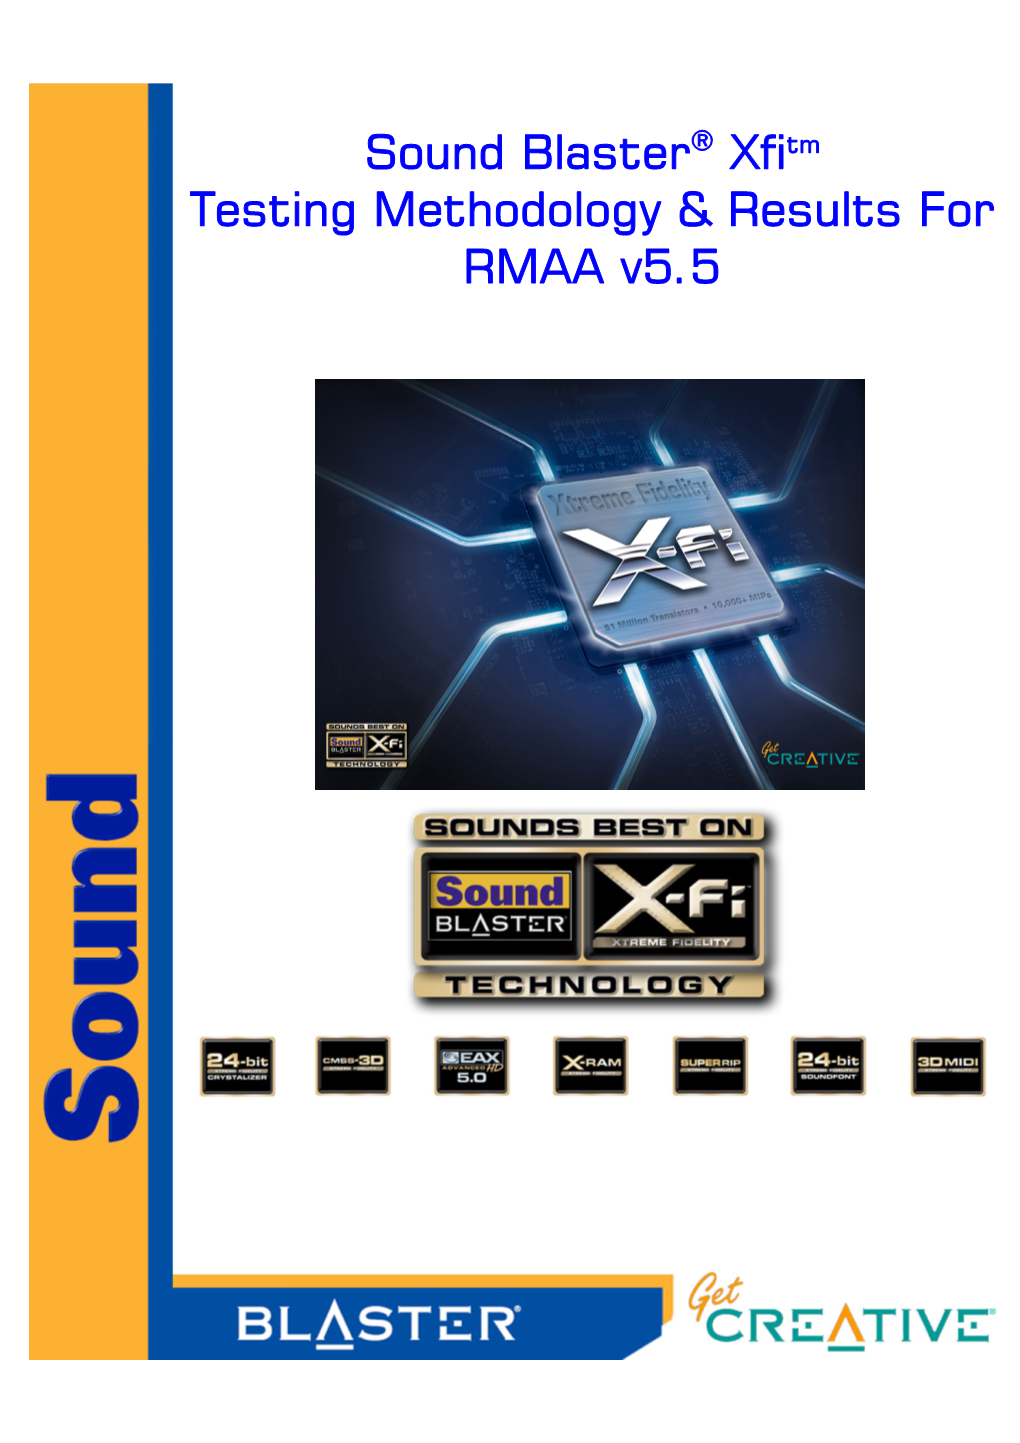 Sound Blaster® Xfitm Testing Methodology & Results for RMAA V5.5